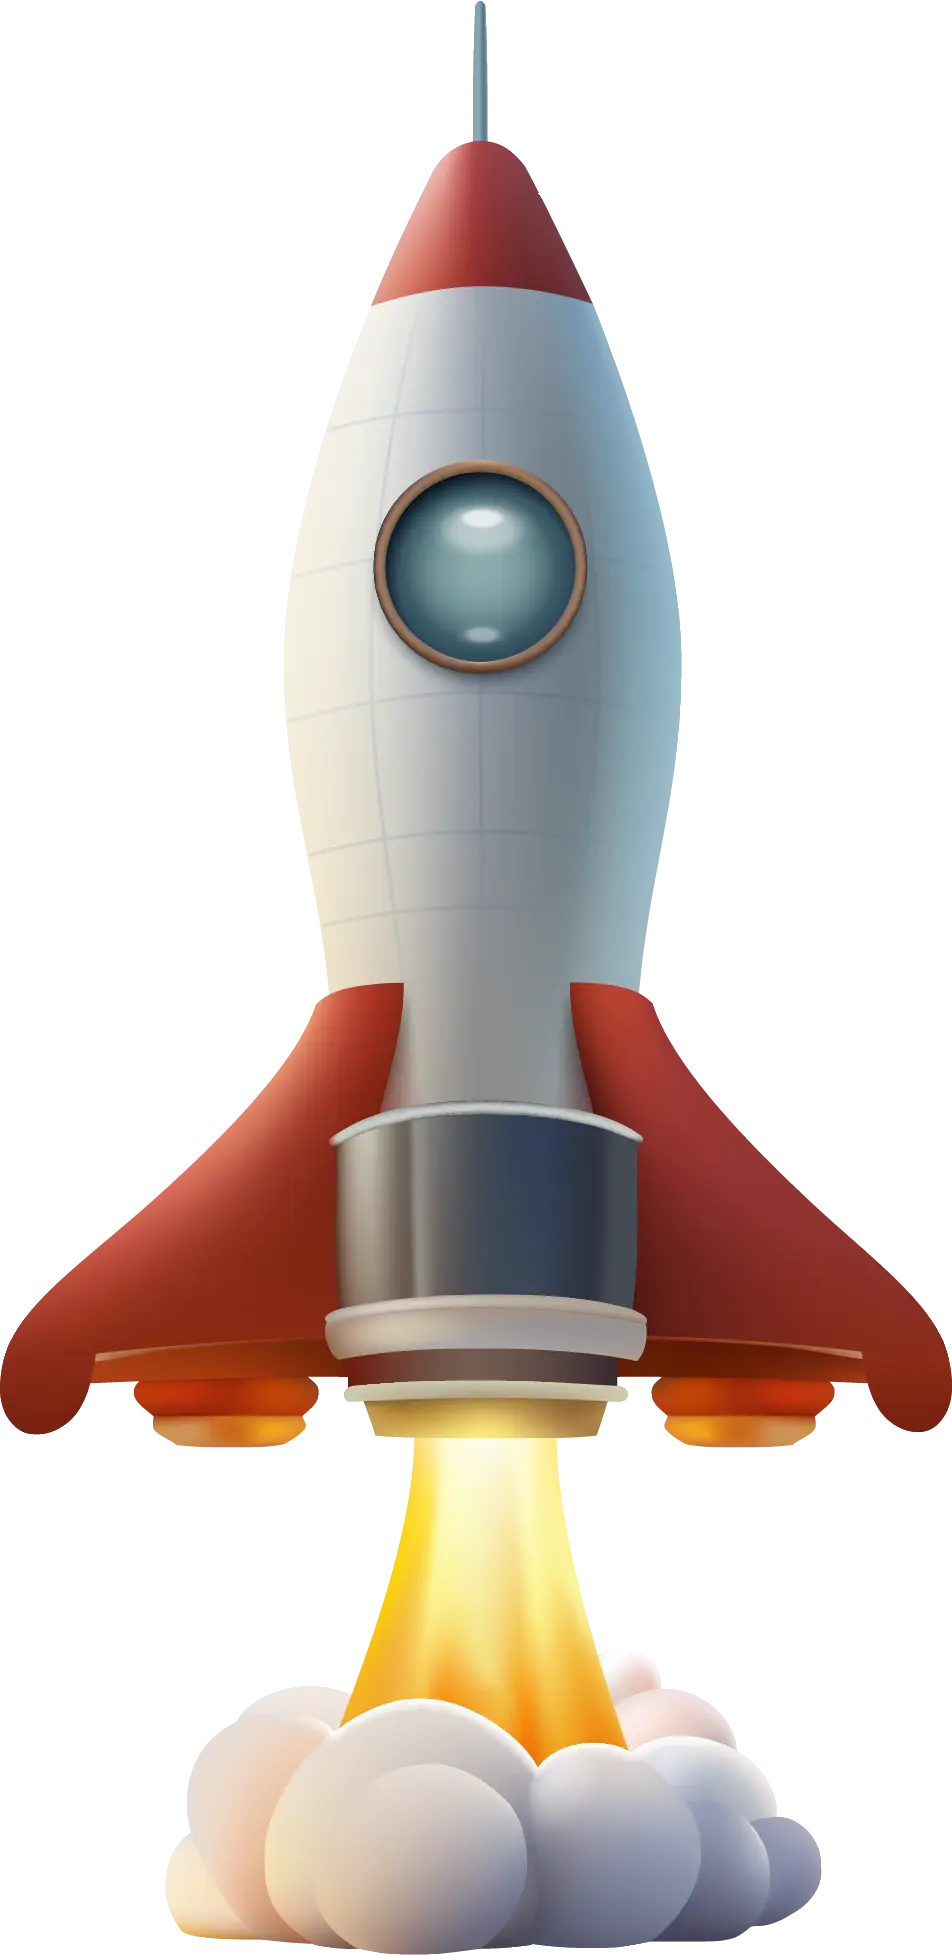 rocket speed website kostas scinskas